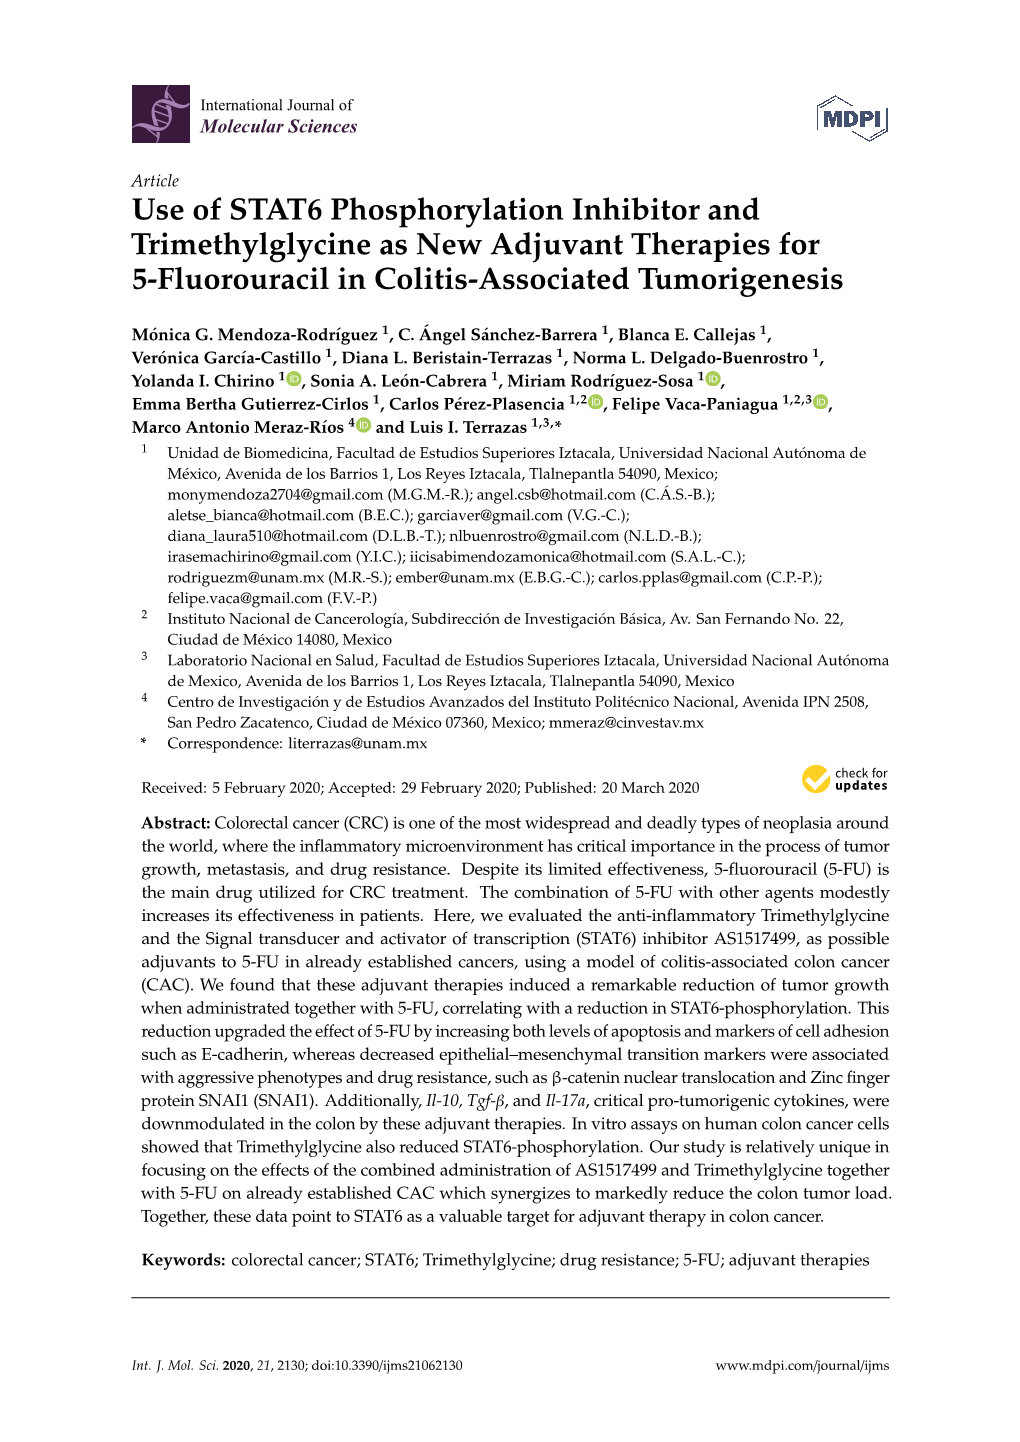 Use of STAT6 Phosphorylation Inhibitor and Trimethylglycine As New Adjuvant Therapies for 5-Fluorouracil in Colitis-Associated Tumorigenesis